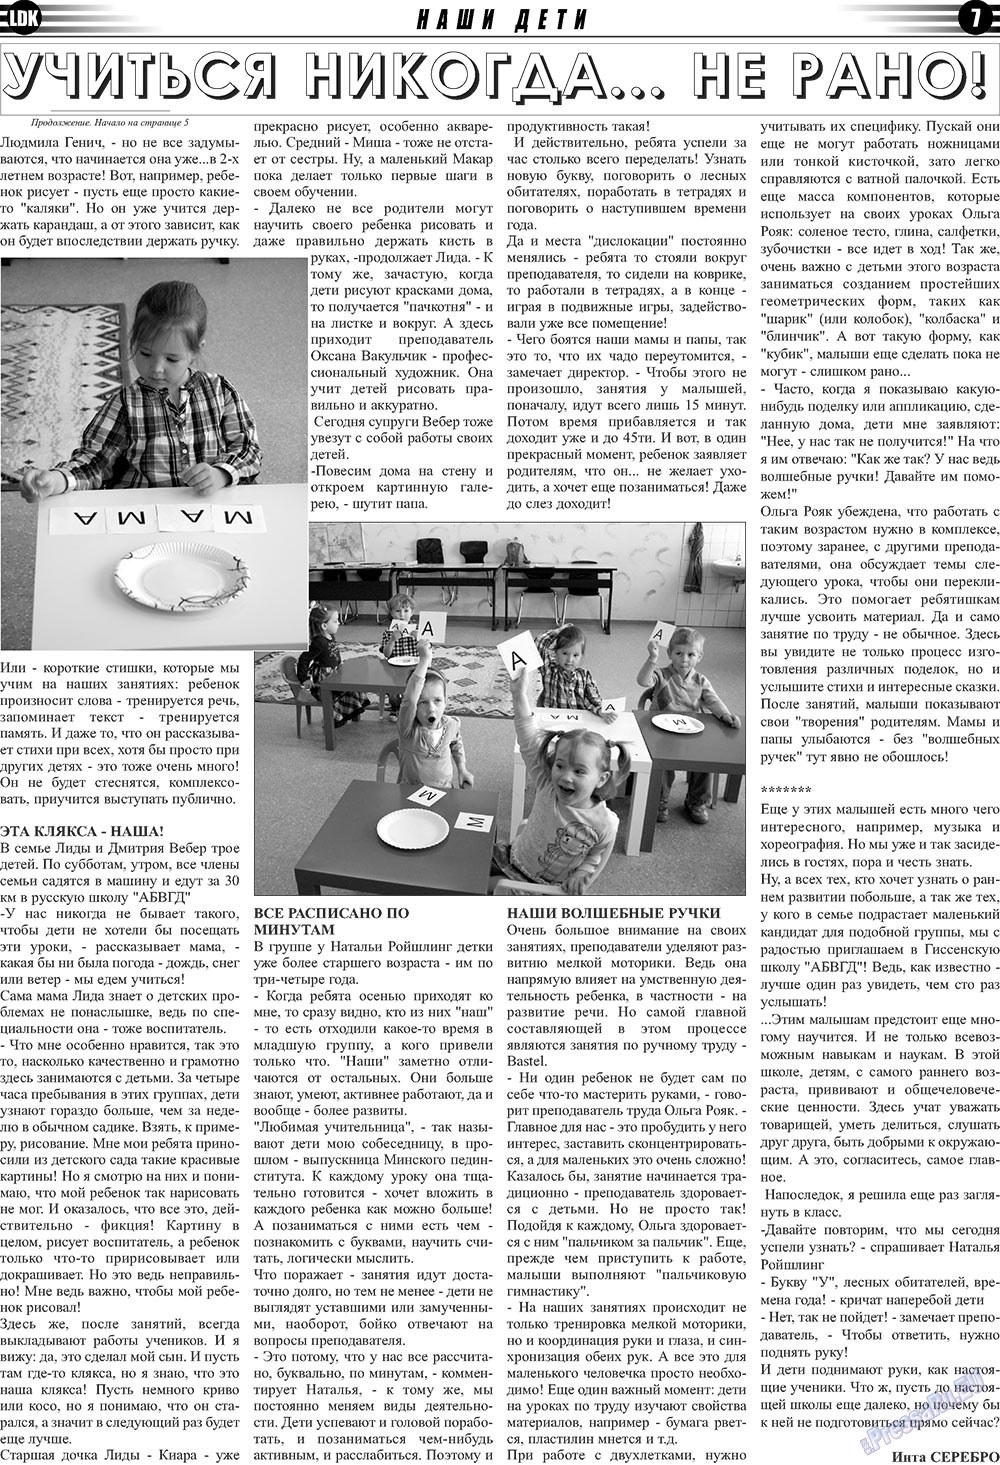 LDK по-русски, газета. 2011 №3 стр.7